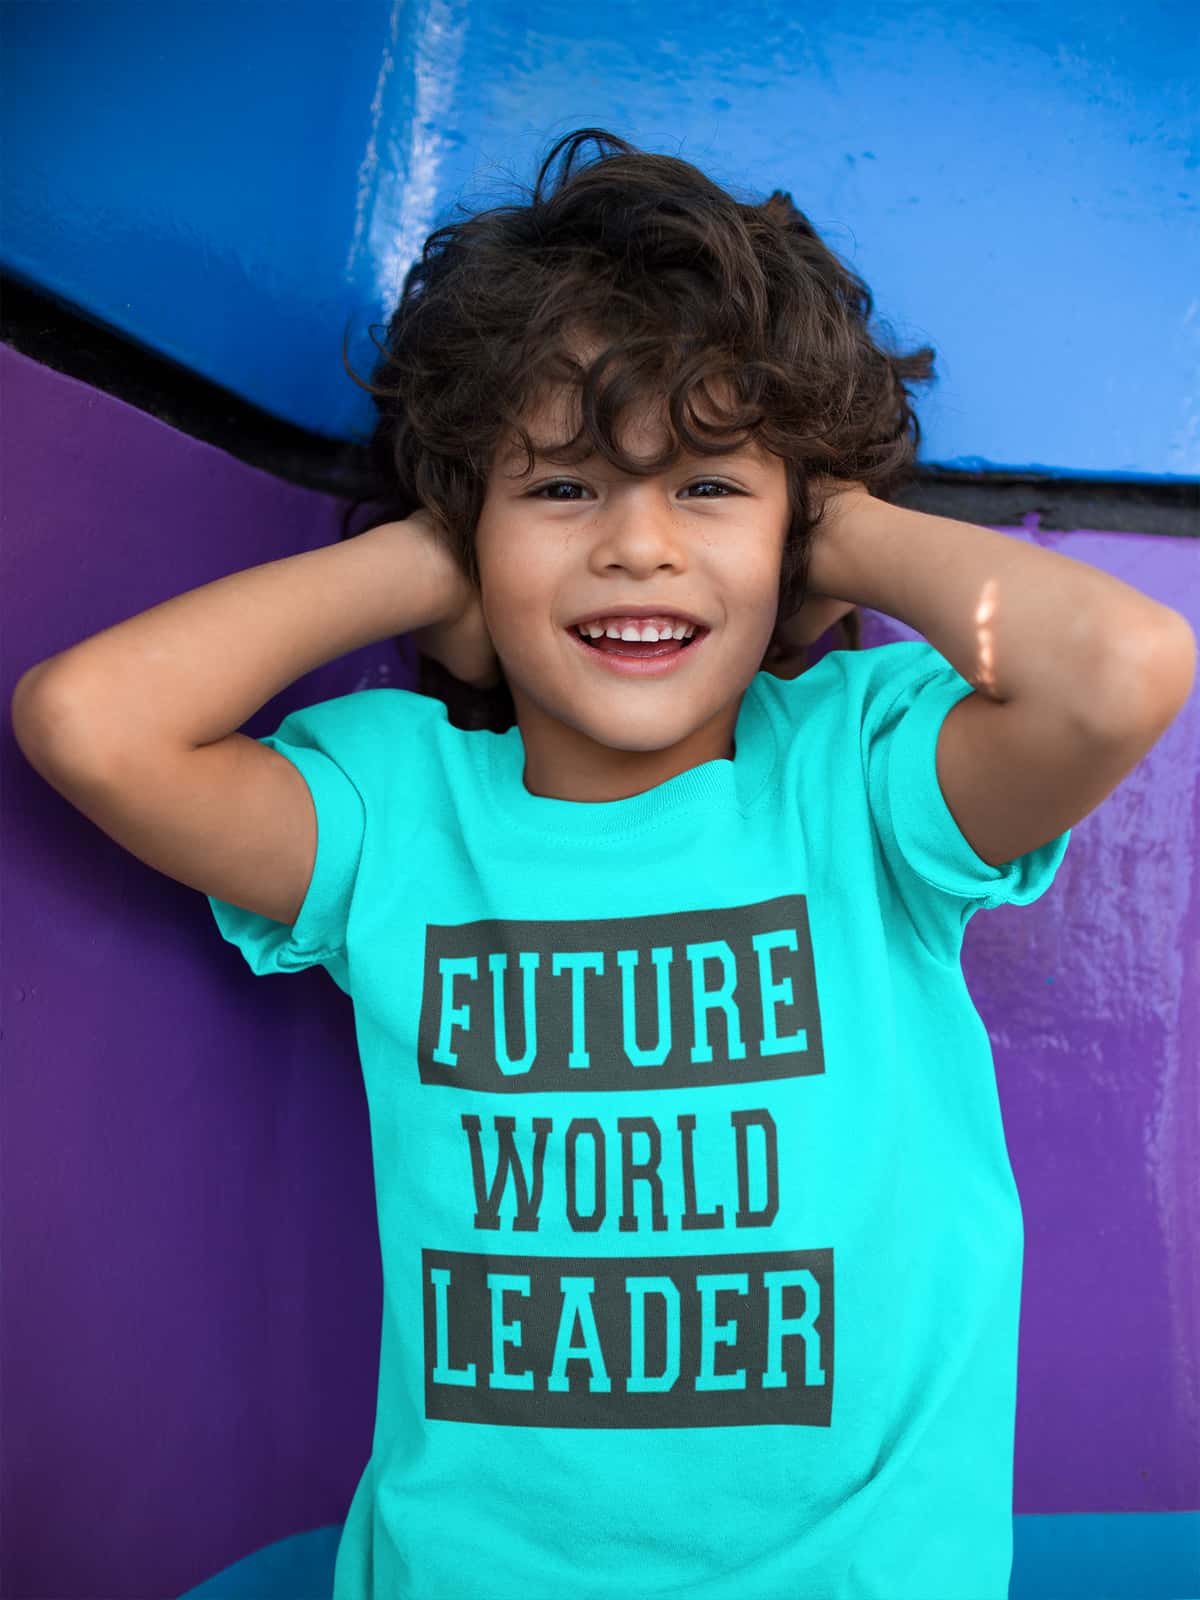 future world leader funny kids printed tshirt jopokart